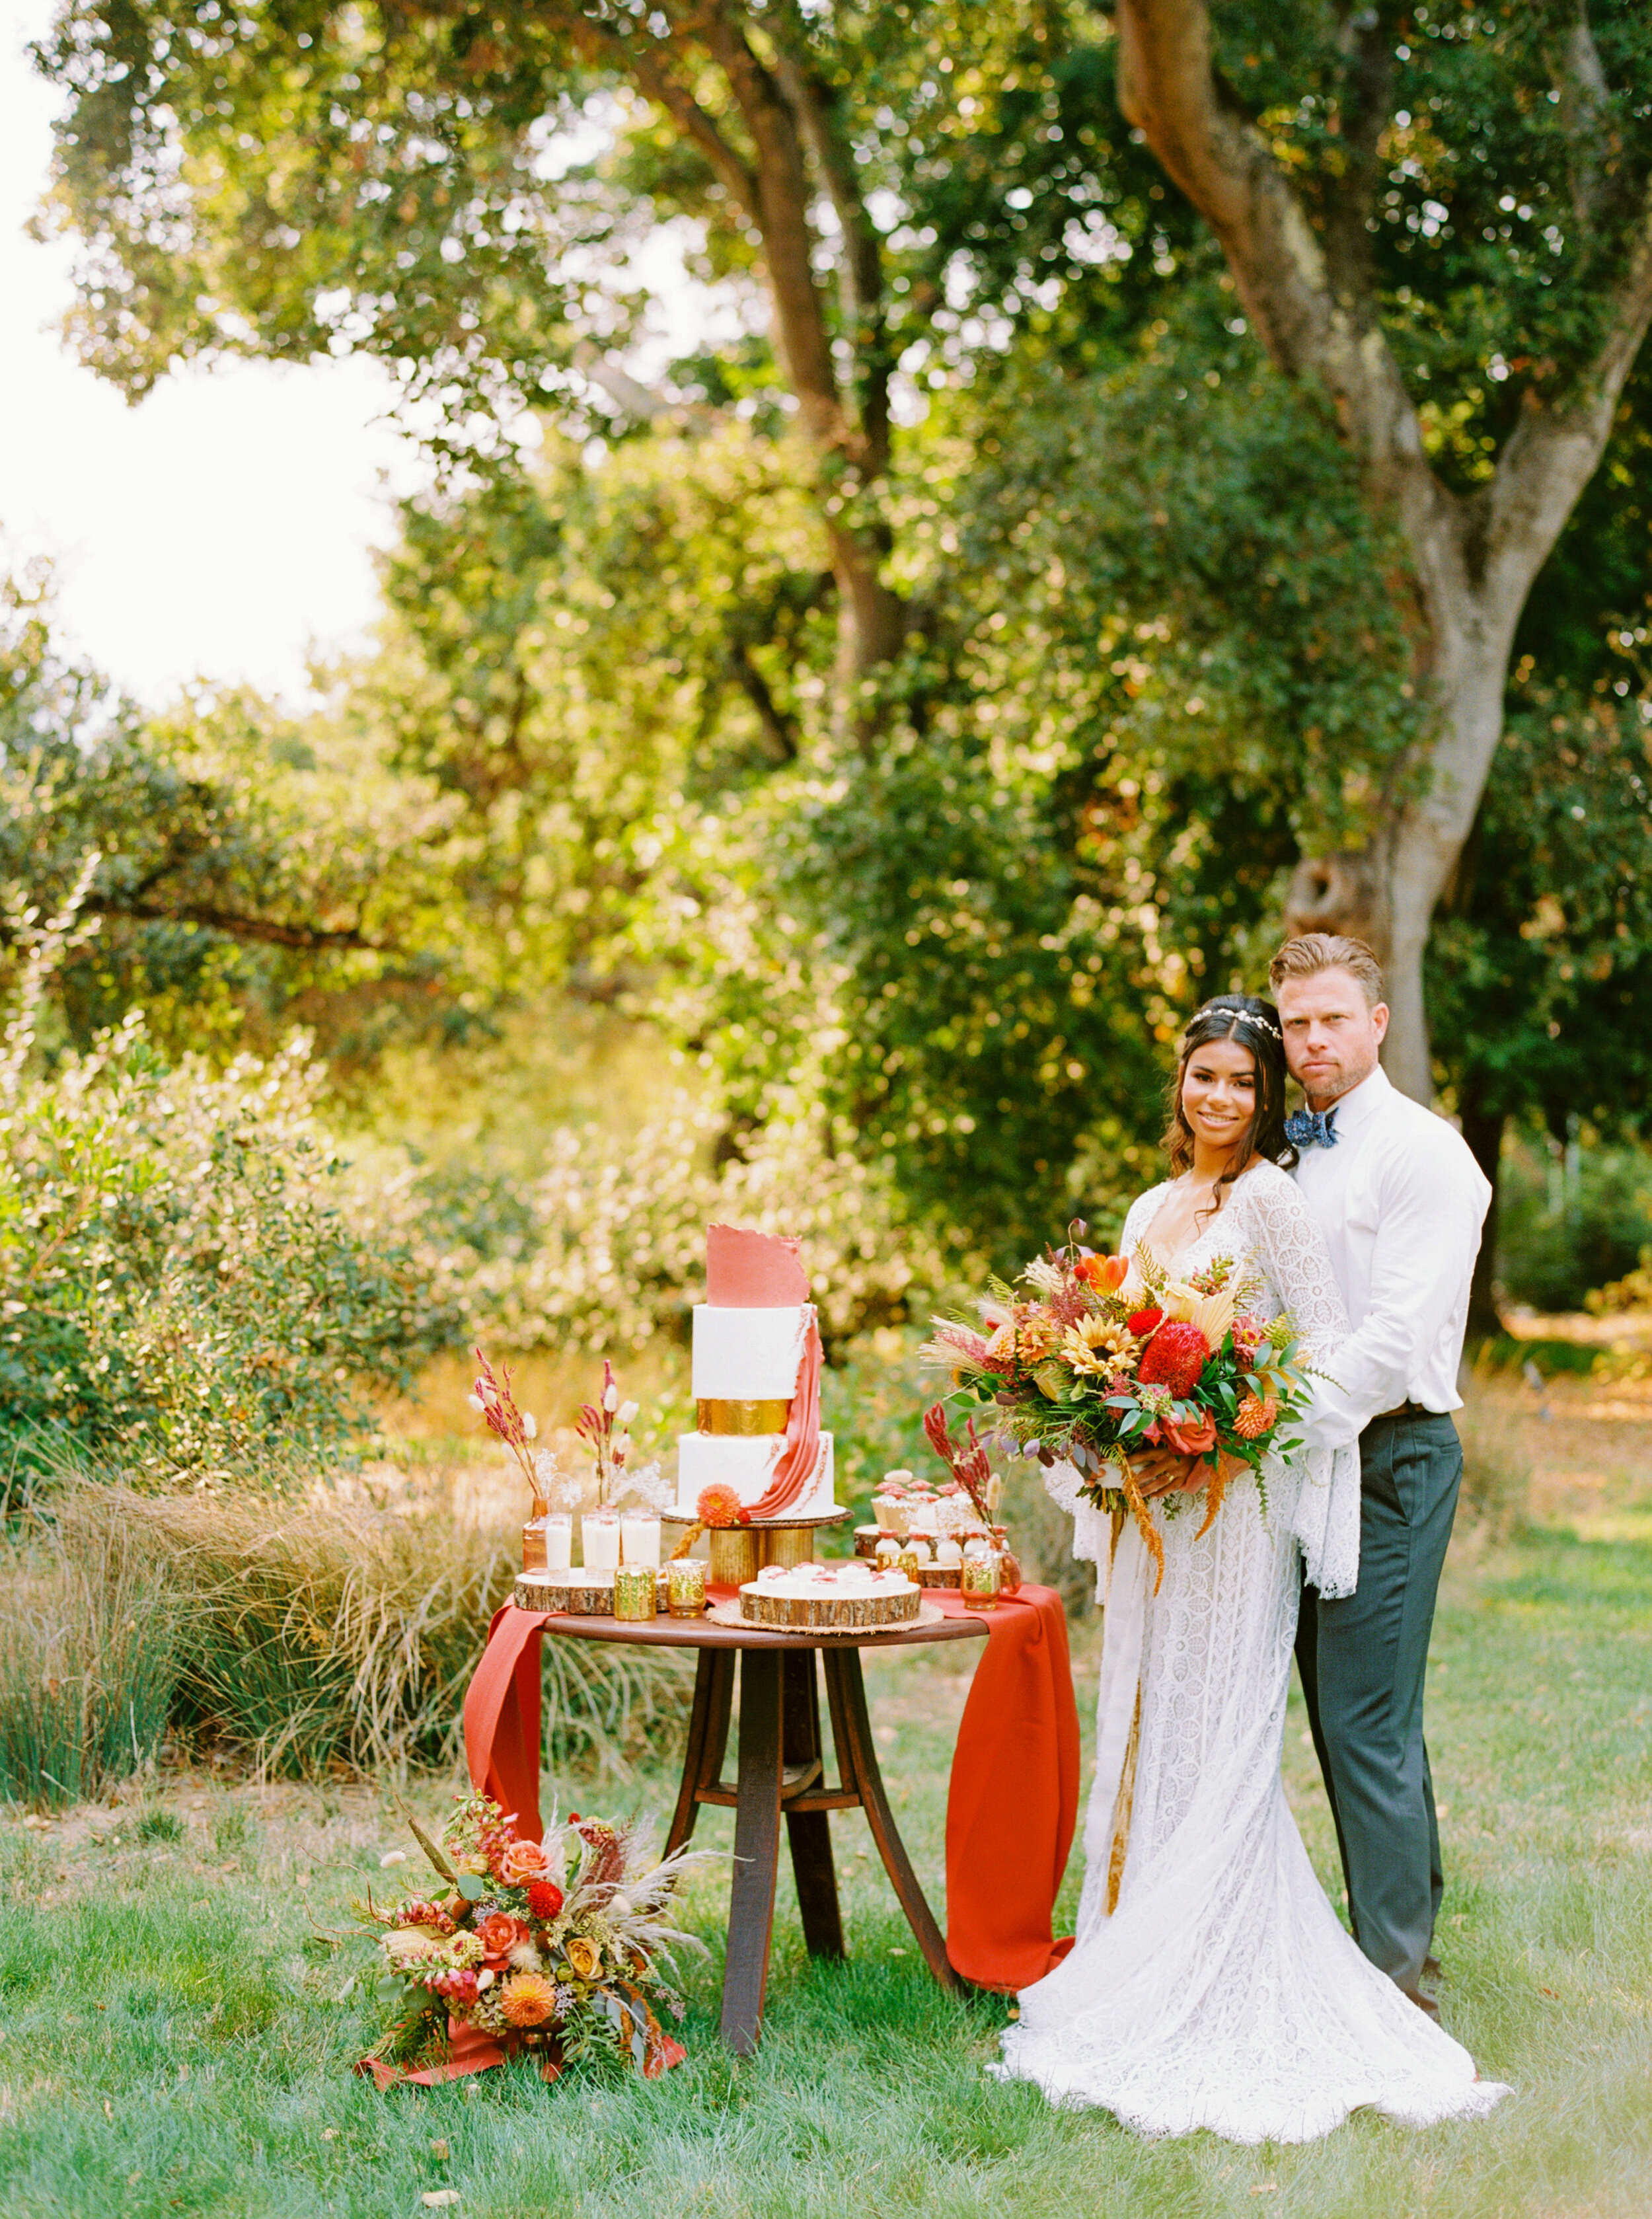 Sarahi Hadden - An Earthy Summer Boho Inspired Wedding with Sunset Hues at Gardener Ranch-12.jpg